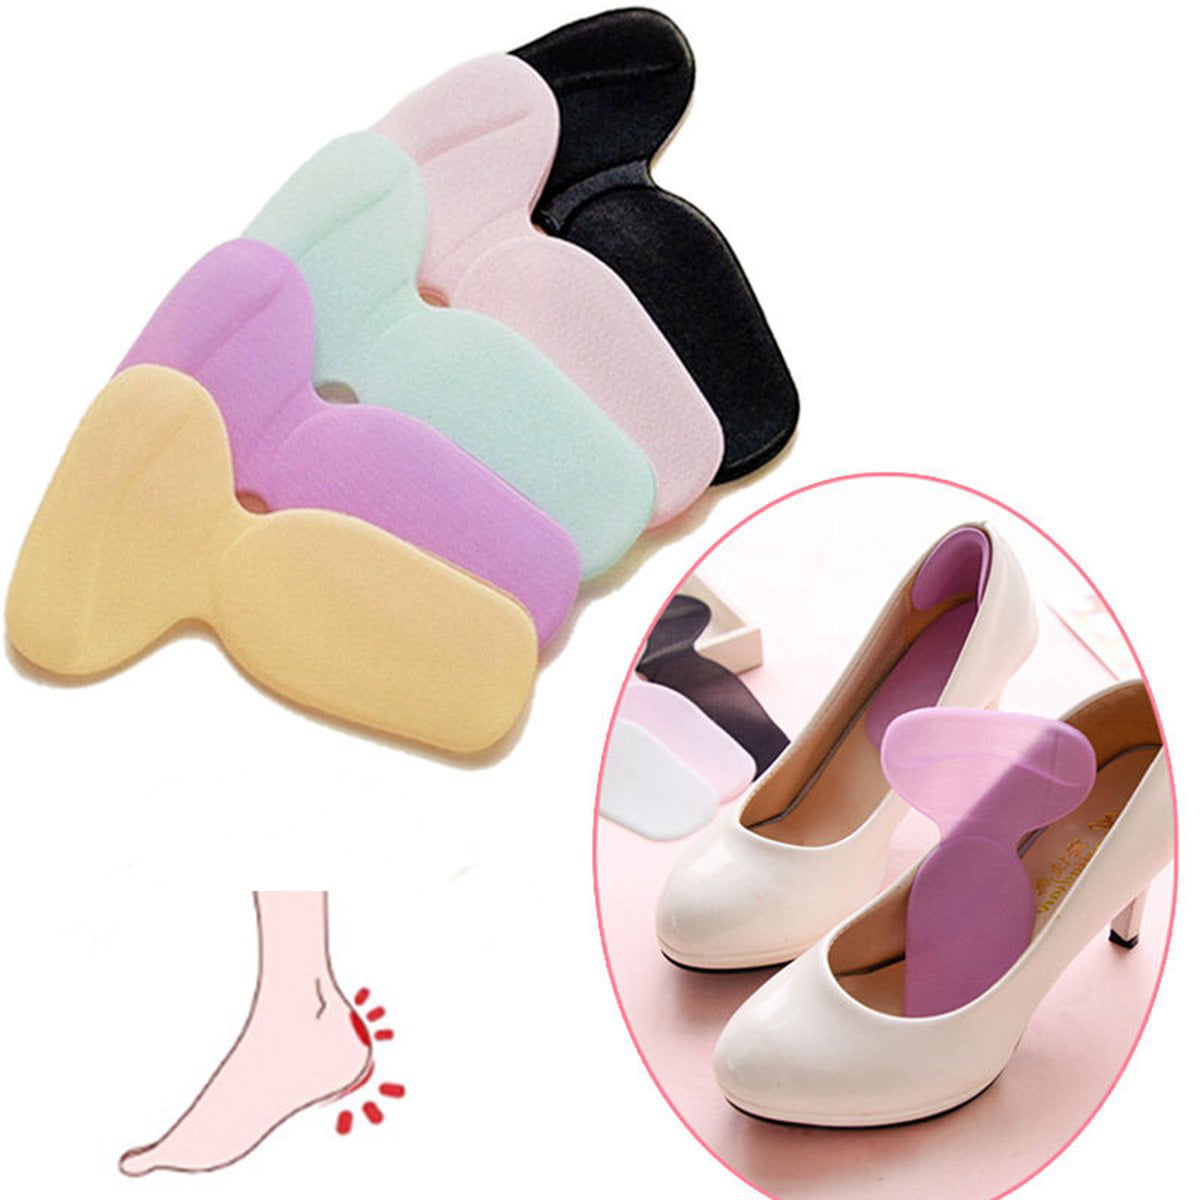 5pairs Heel Cushion Insertssoft Shoe Inserts Heel Cushion Pads Self Adhesive Foot Care 